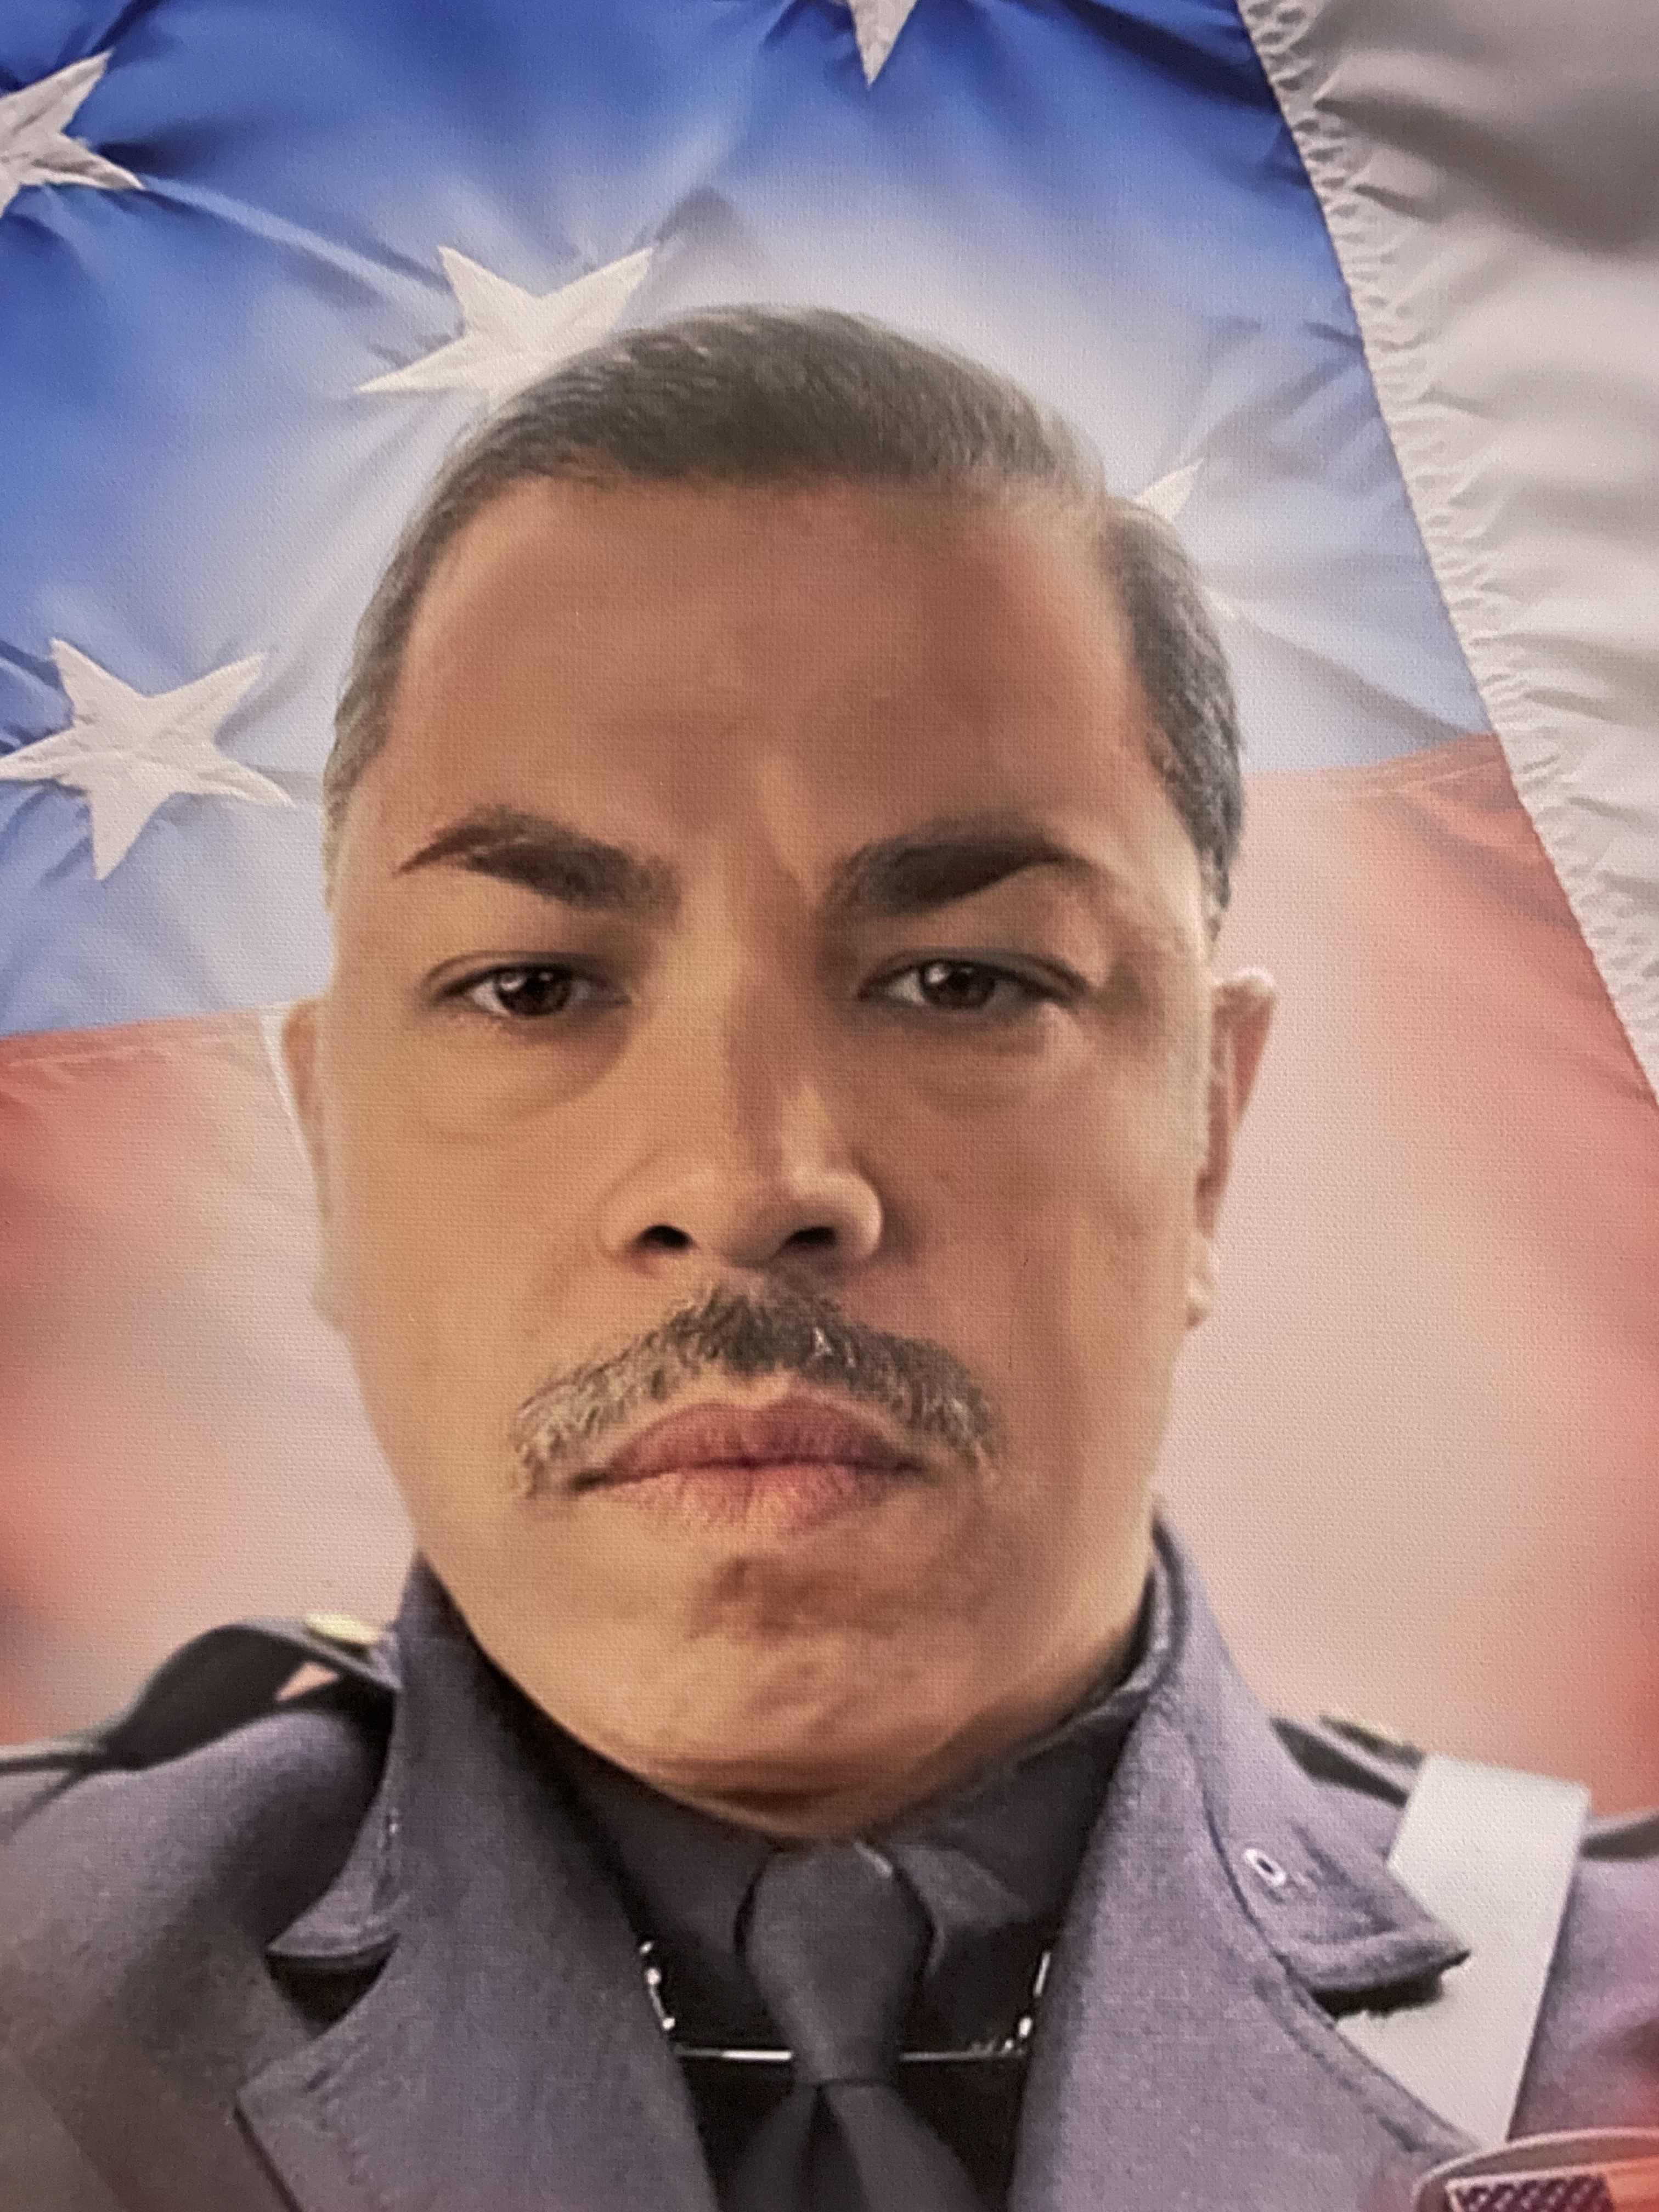 Police Officer Daniel J. Sanchez | New York City Police Department, New York